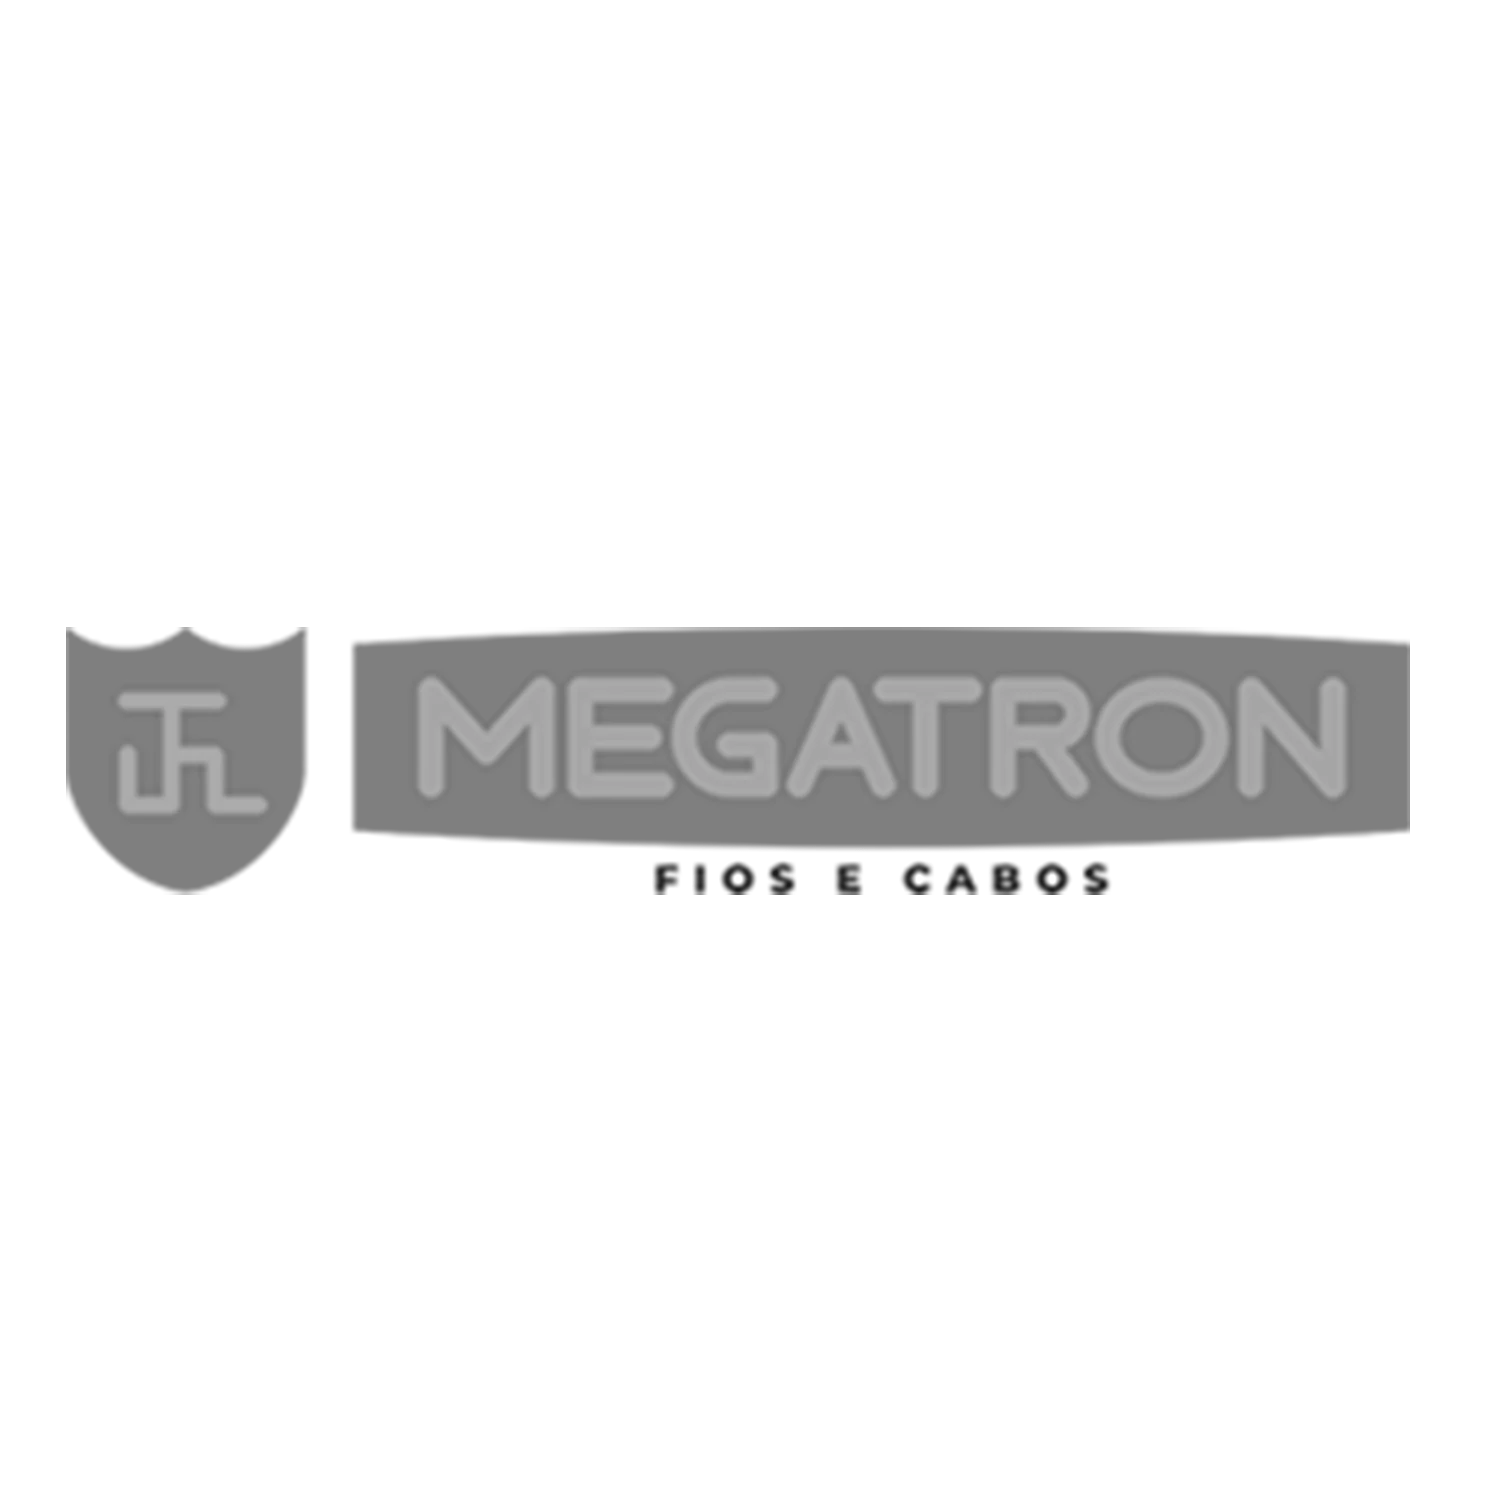 Megatrom